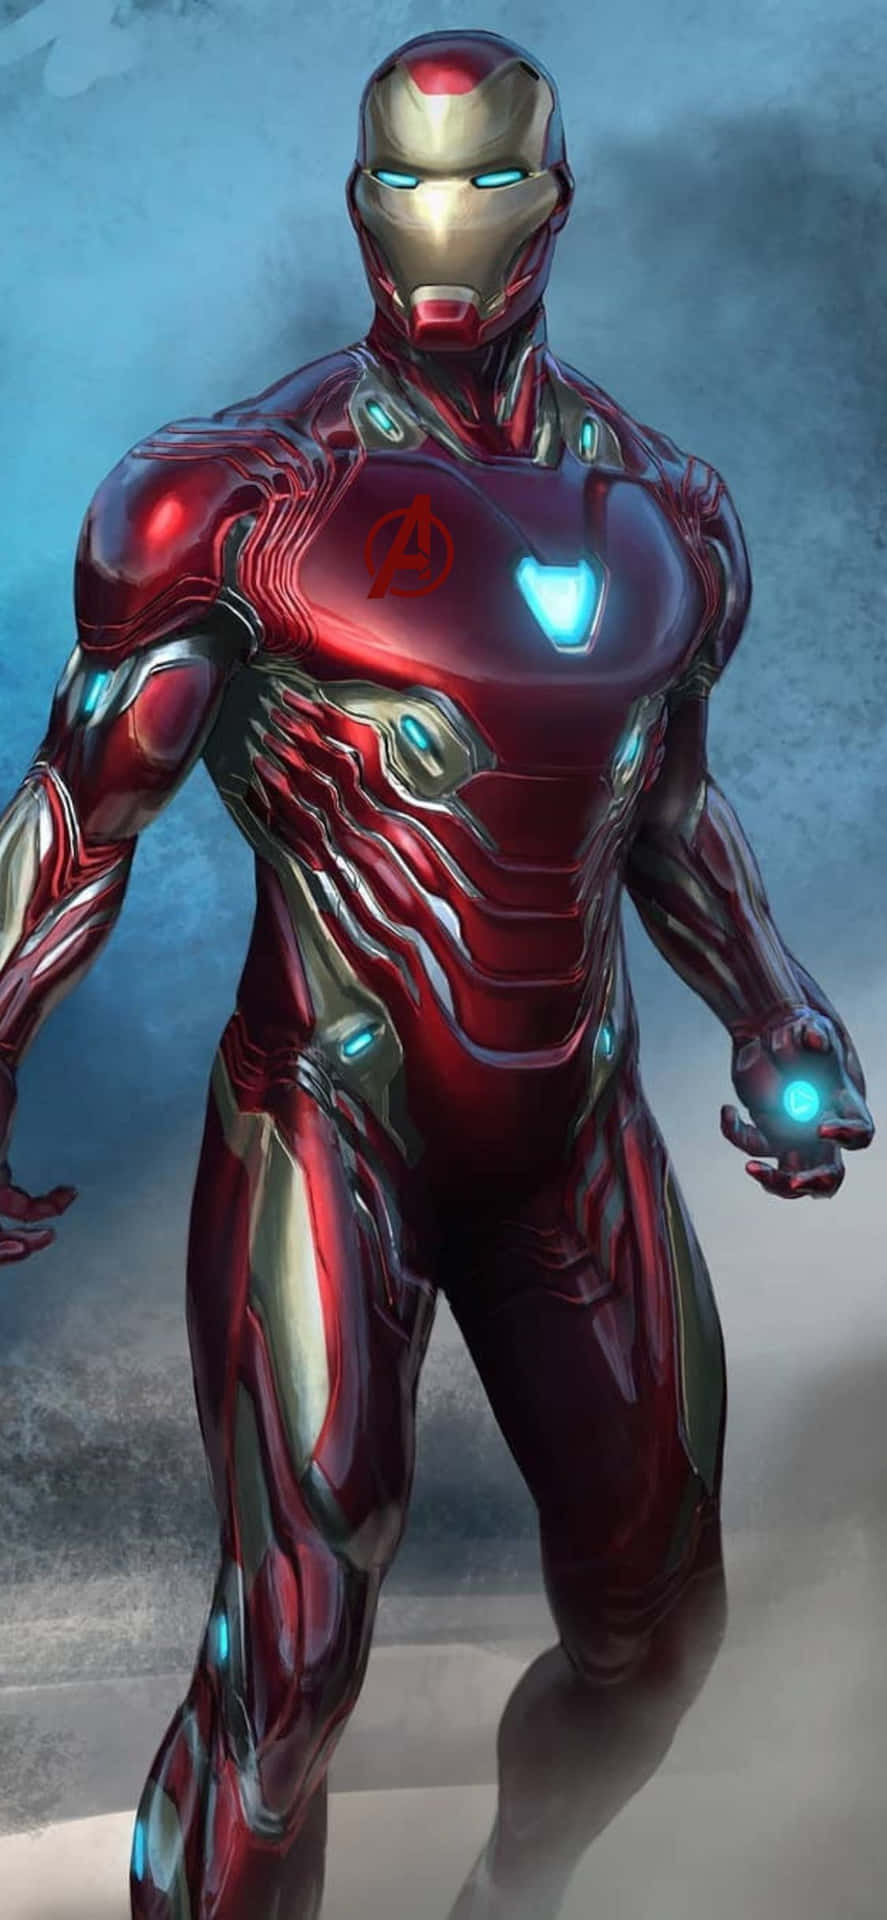 Iphonexs Avengers Bakgrundsbild Med Iron Man I Mark 50-dräkt.